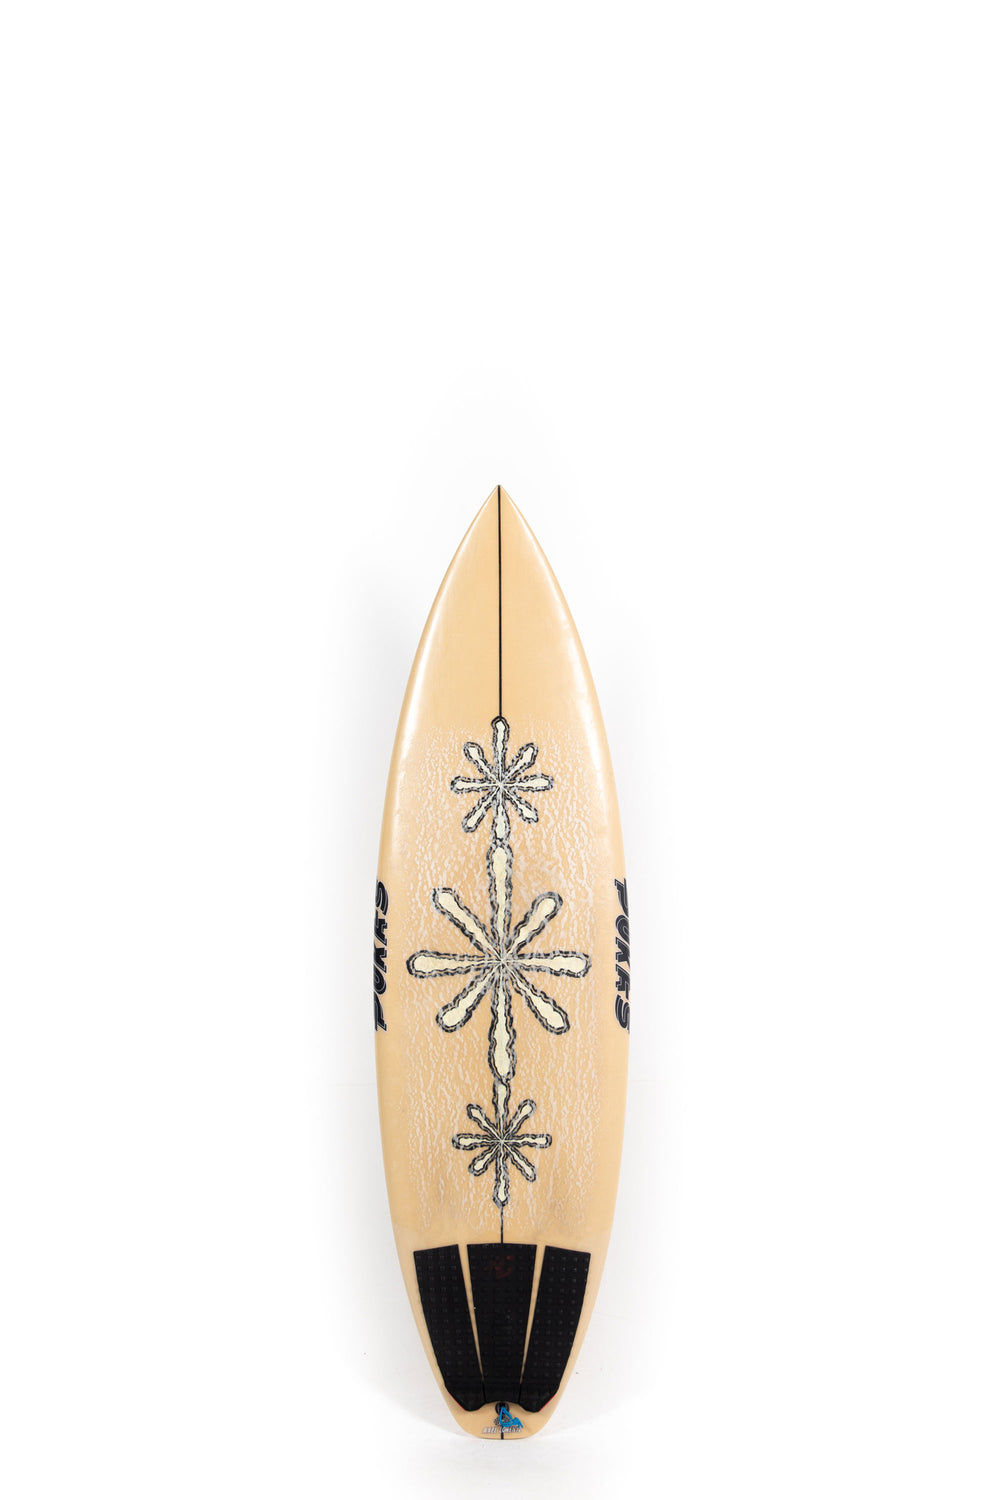 Pukas Surf Shop Pukas Surfboards Tasty Treat 5'10